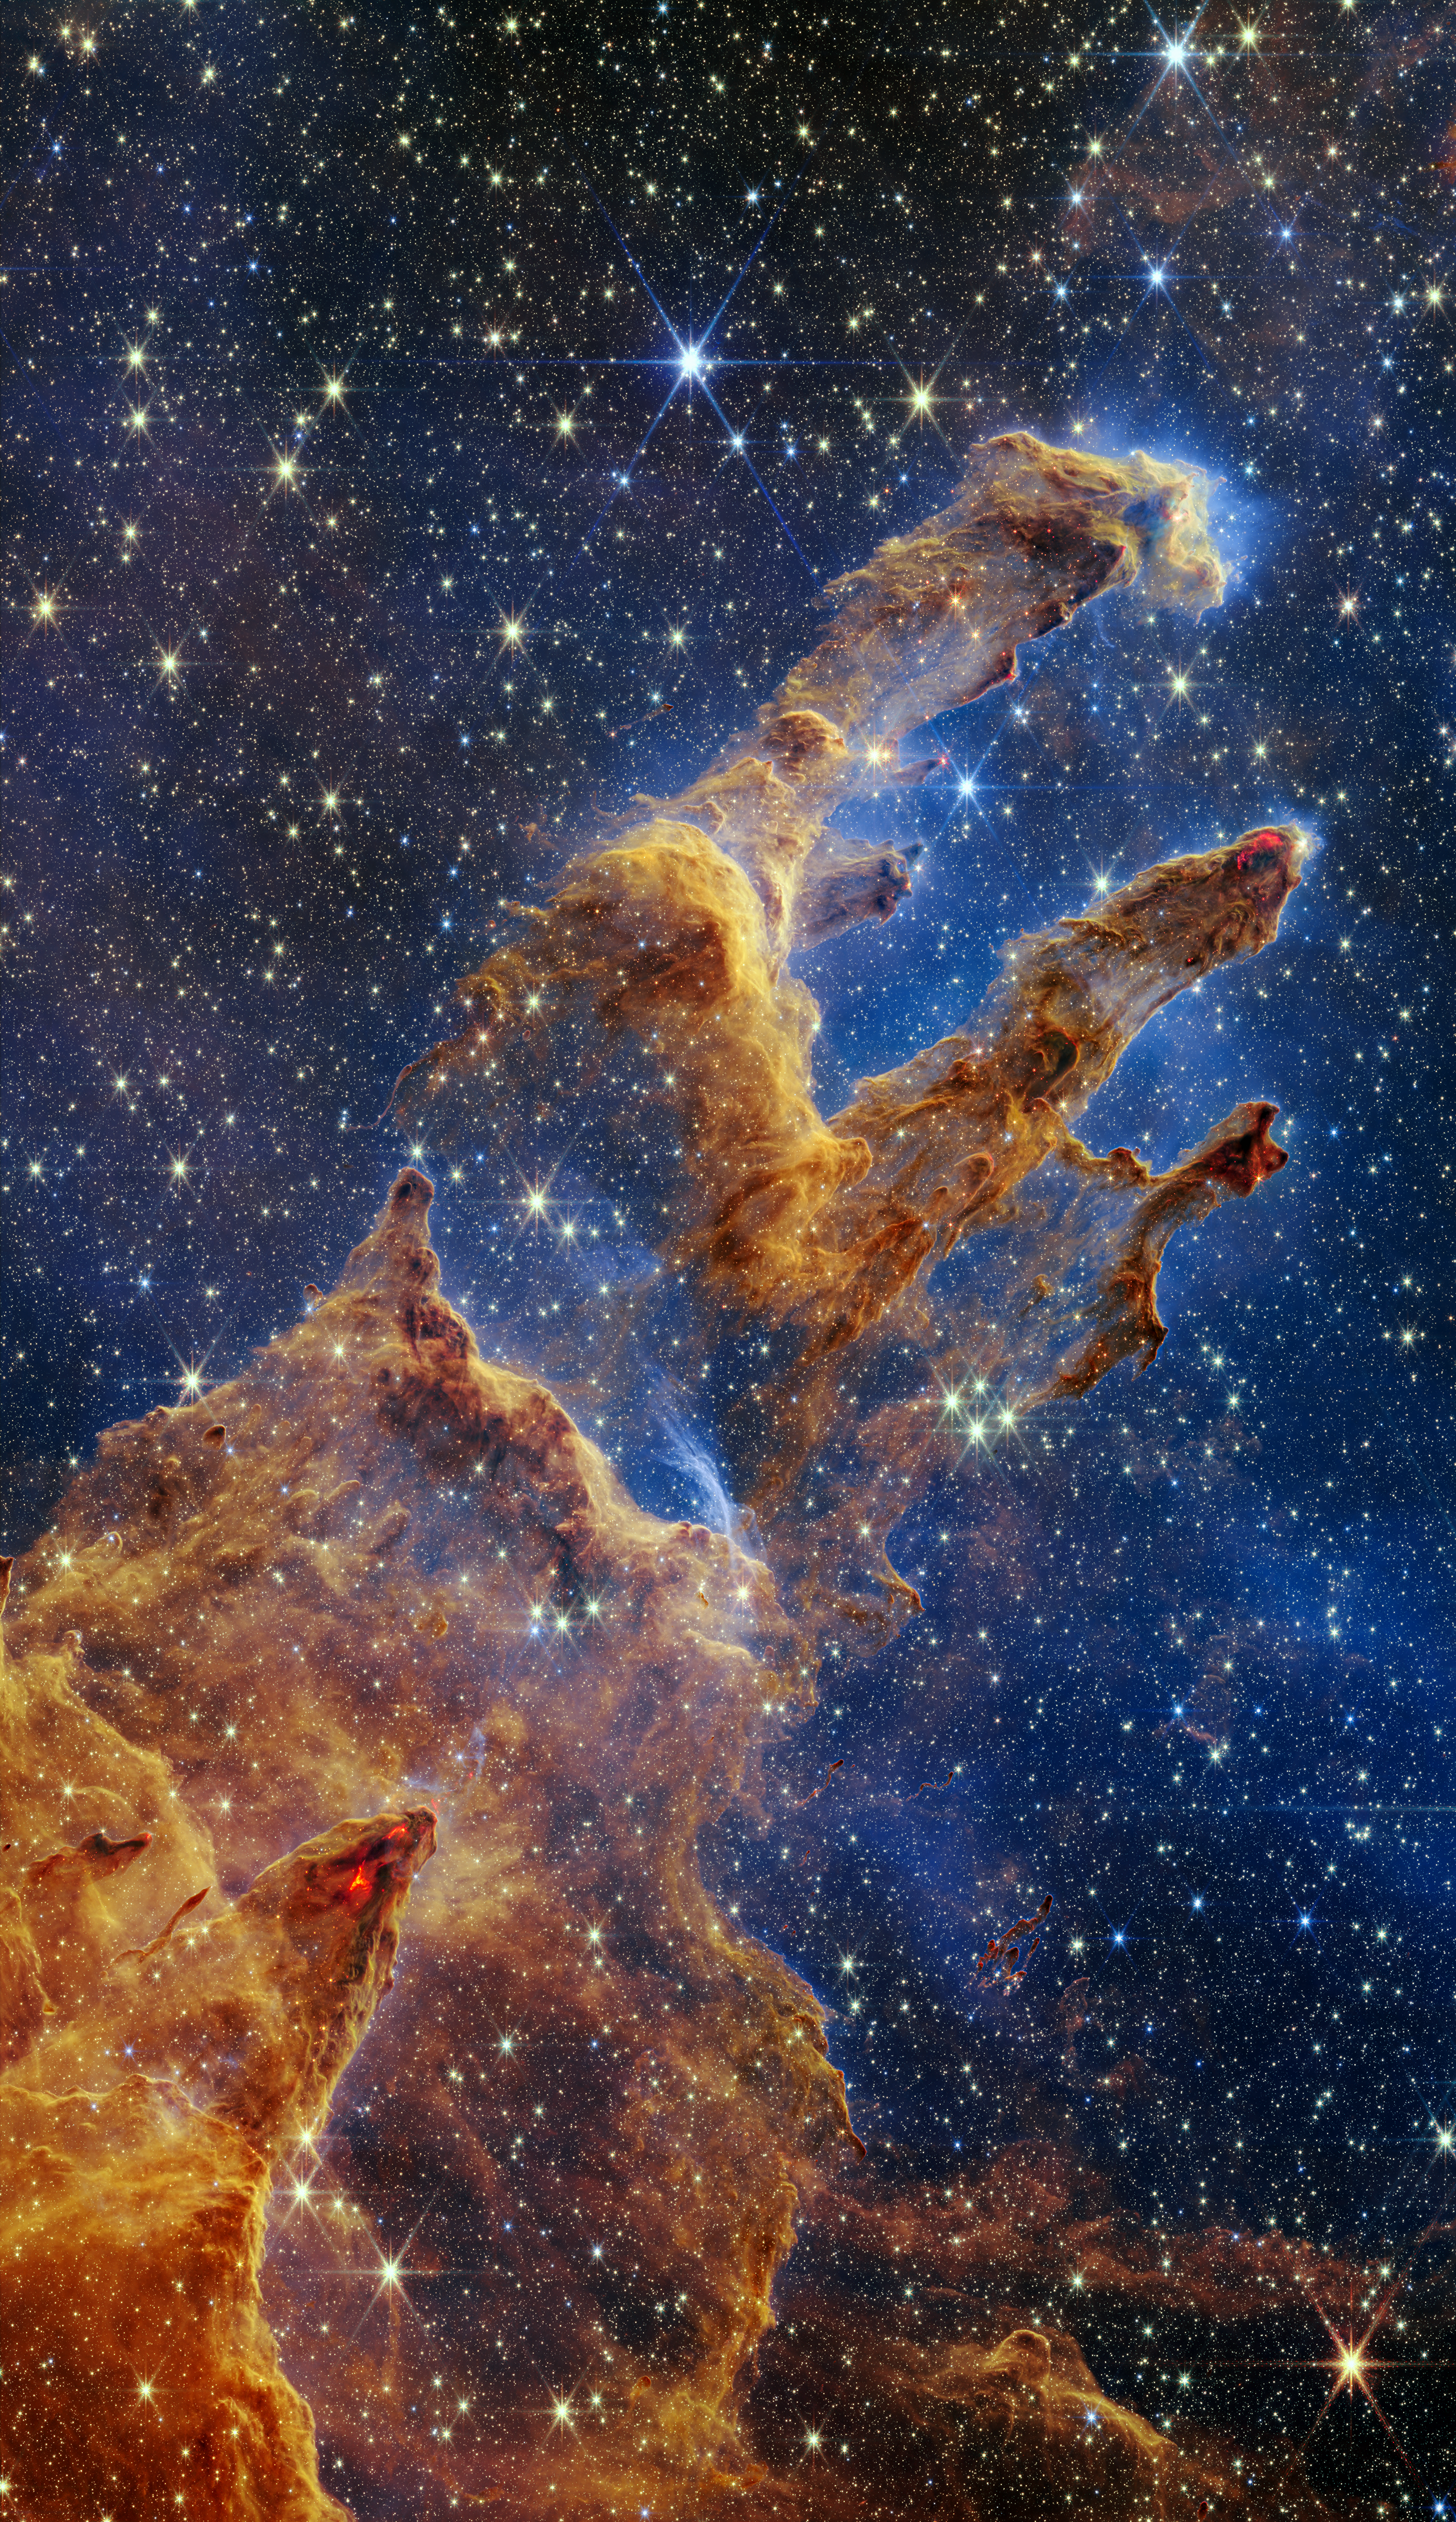 General 2561x4435 nebula space stars James Webb Space Telescope Pillars of Creation NGC 6611 Eagle Nebula galaxy